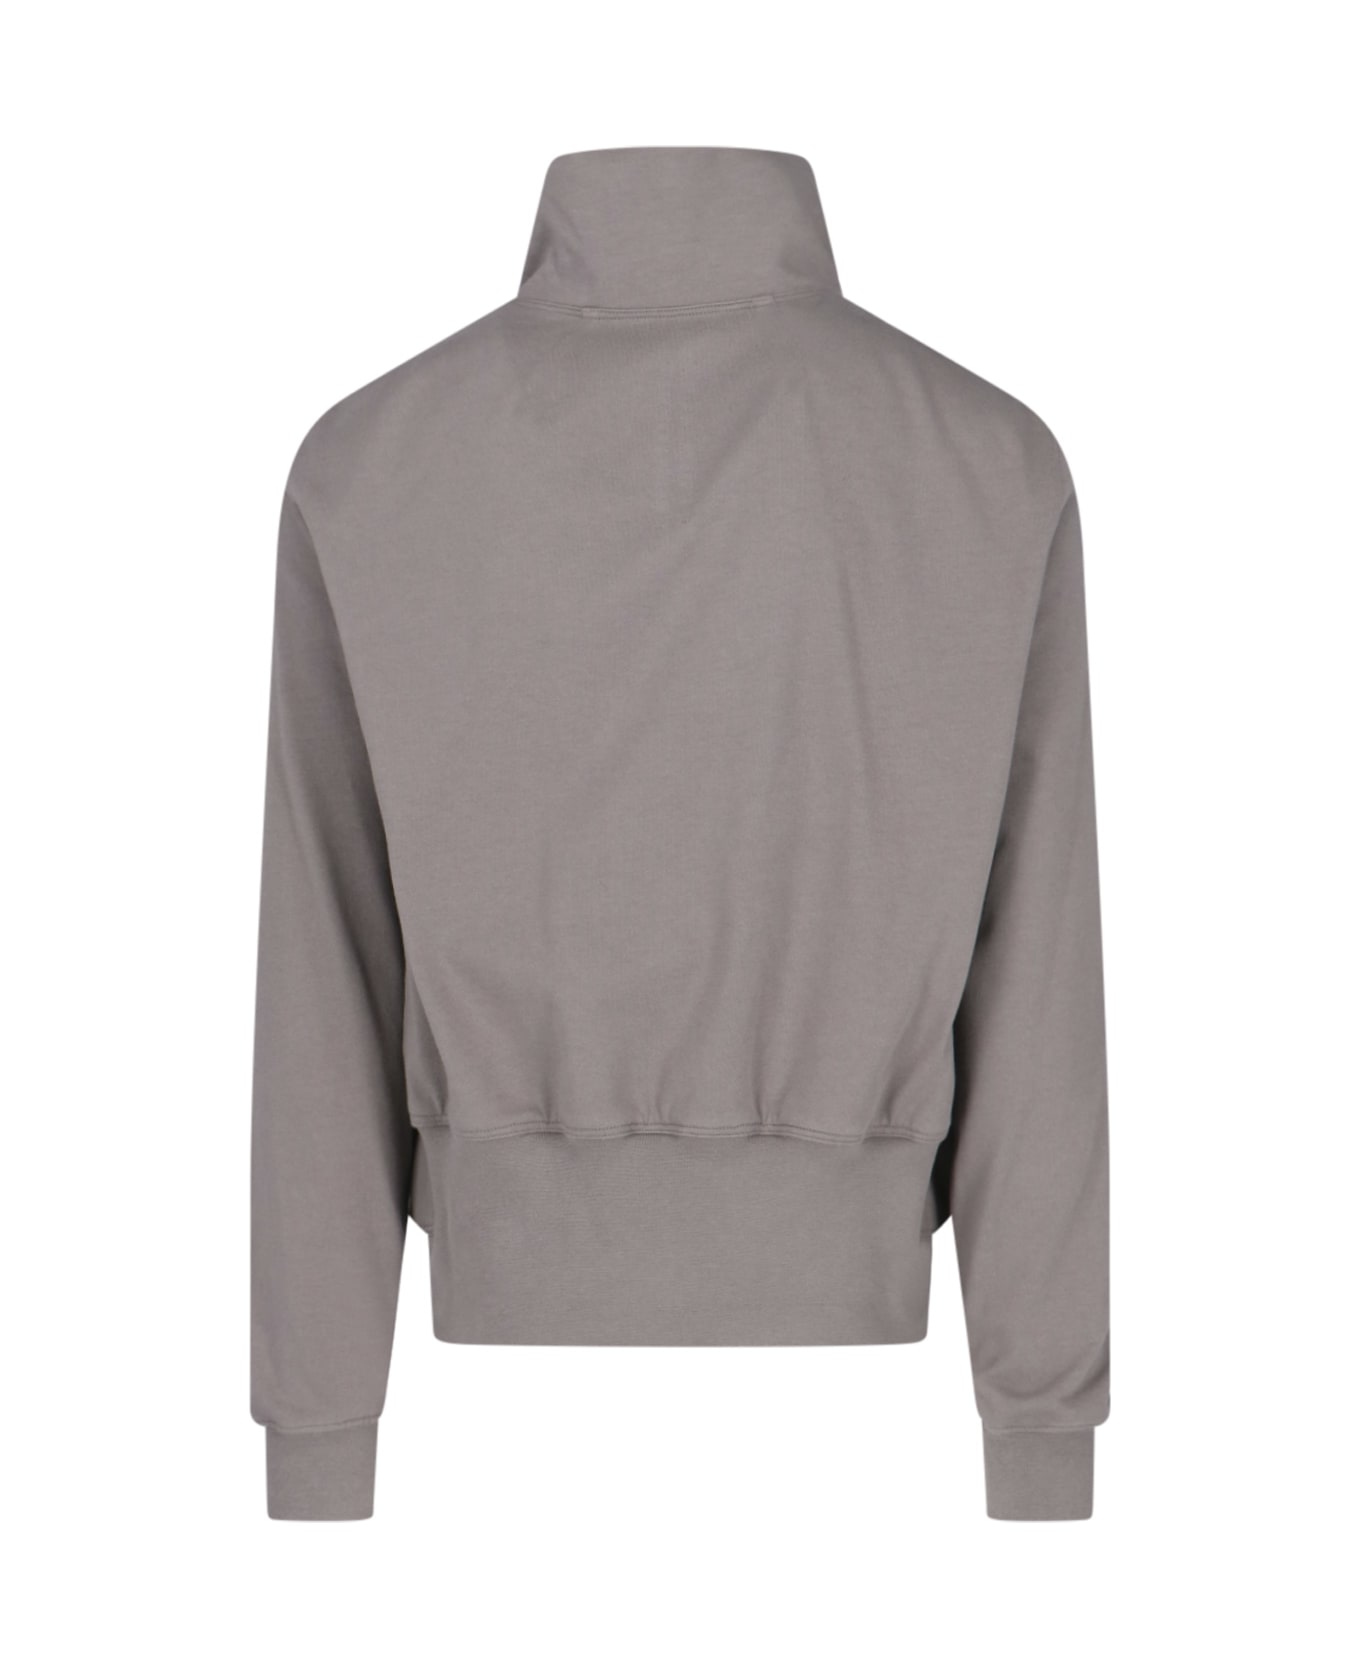 Rick Owens Asymmetrical Zip Sweatshirt - Taupe ニットウェア